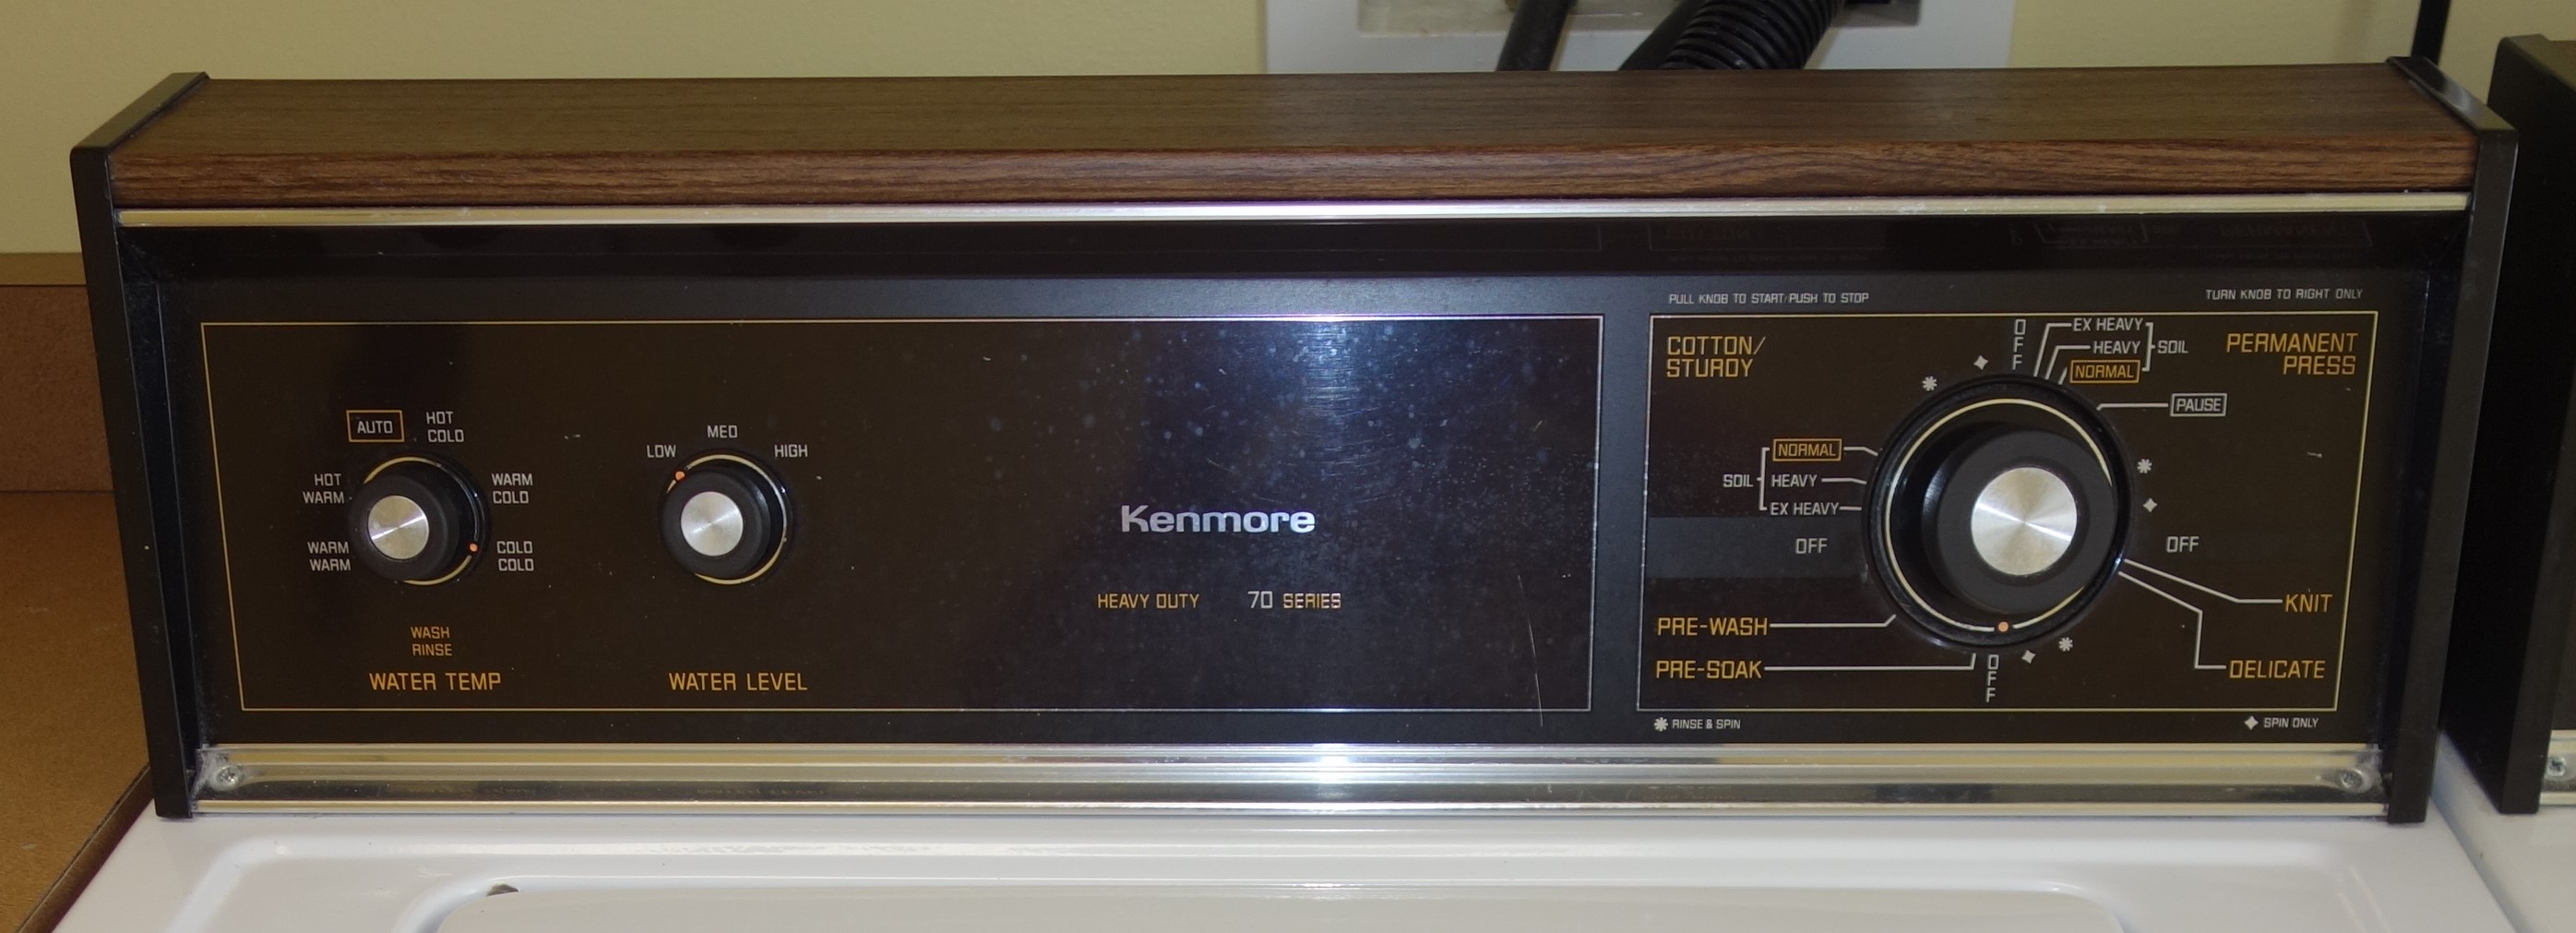 Kenmore Heavy Duty 70 Series Washing Machine  U0026 Kenmore